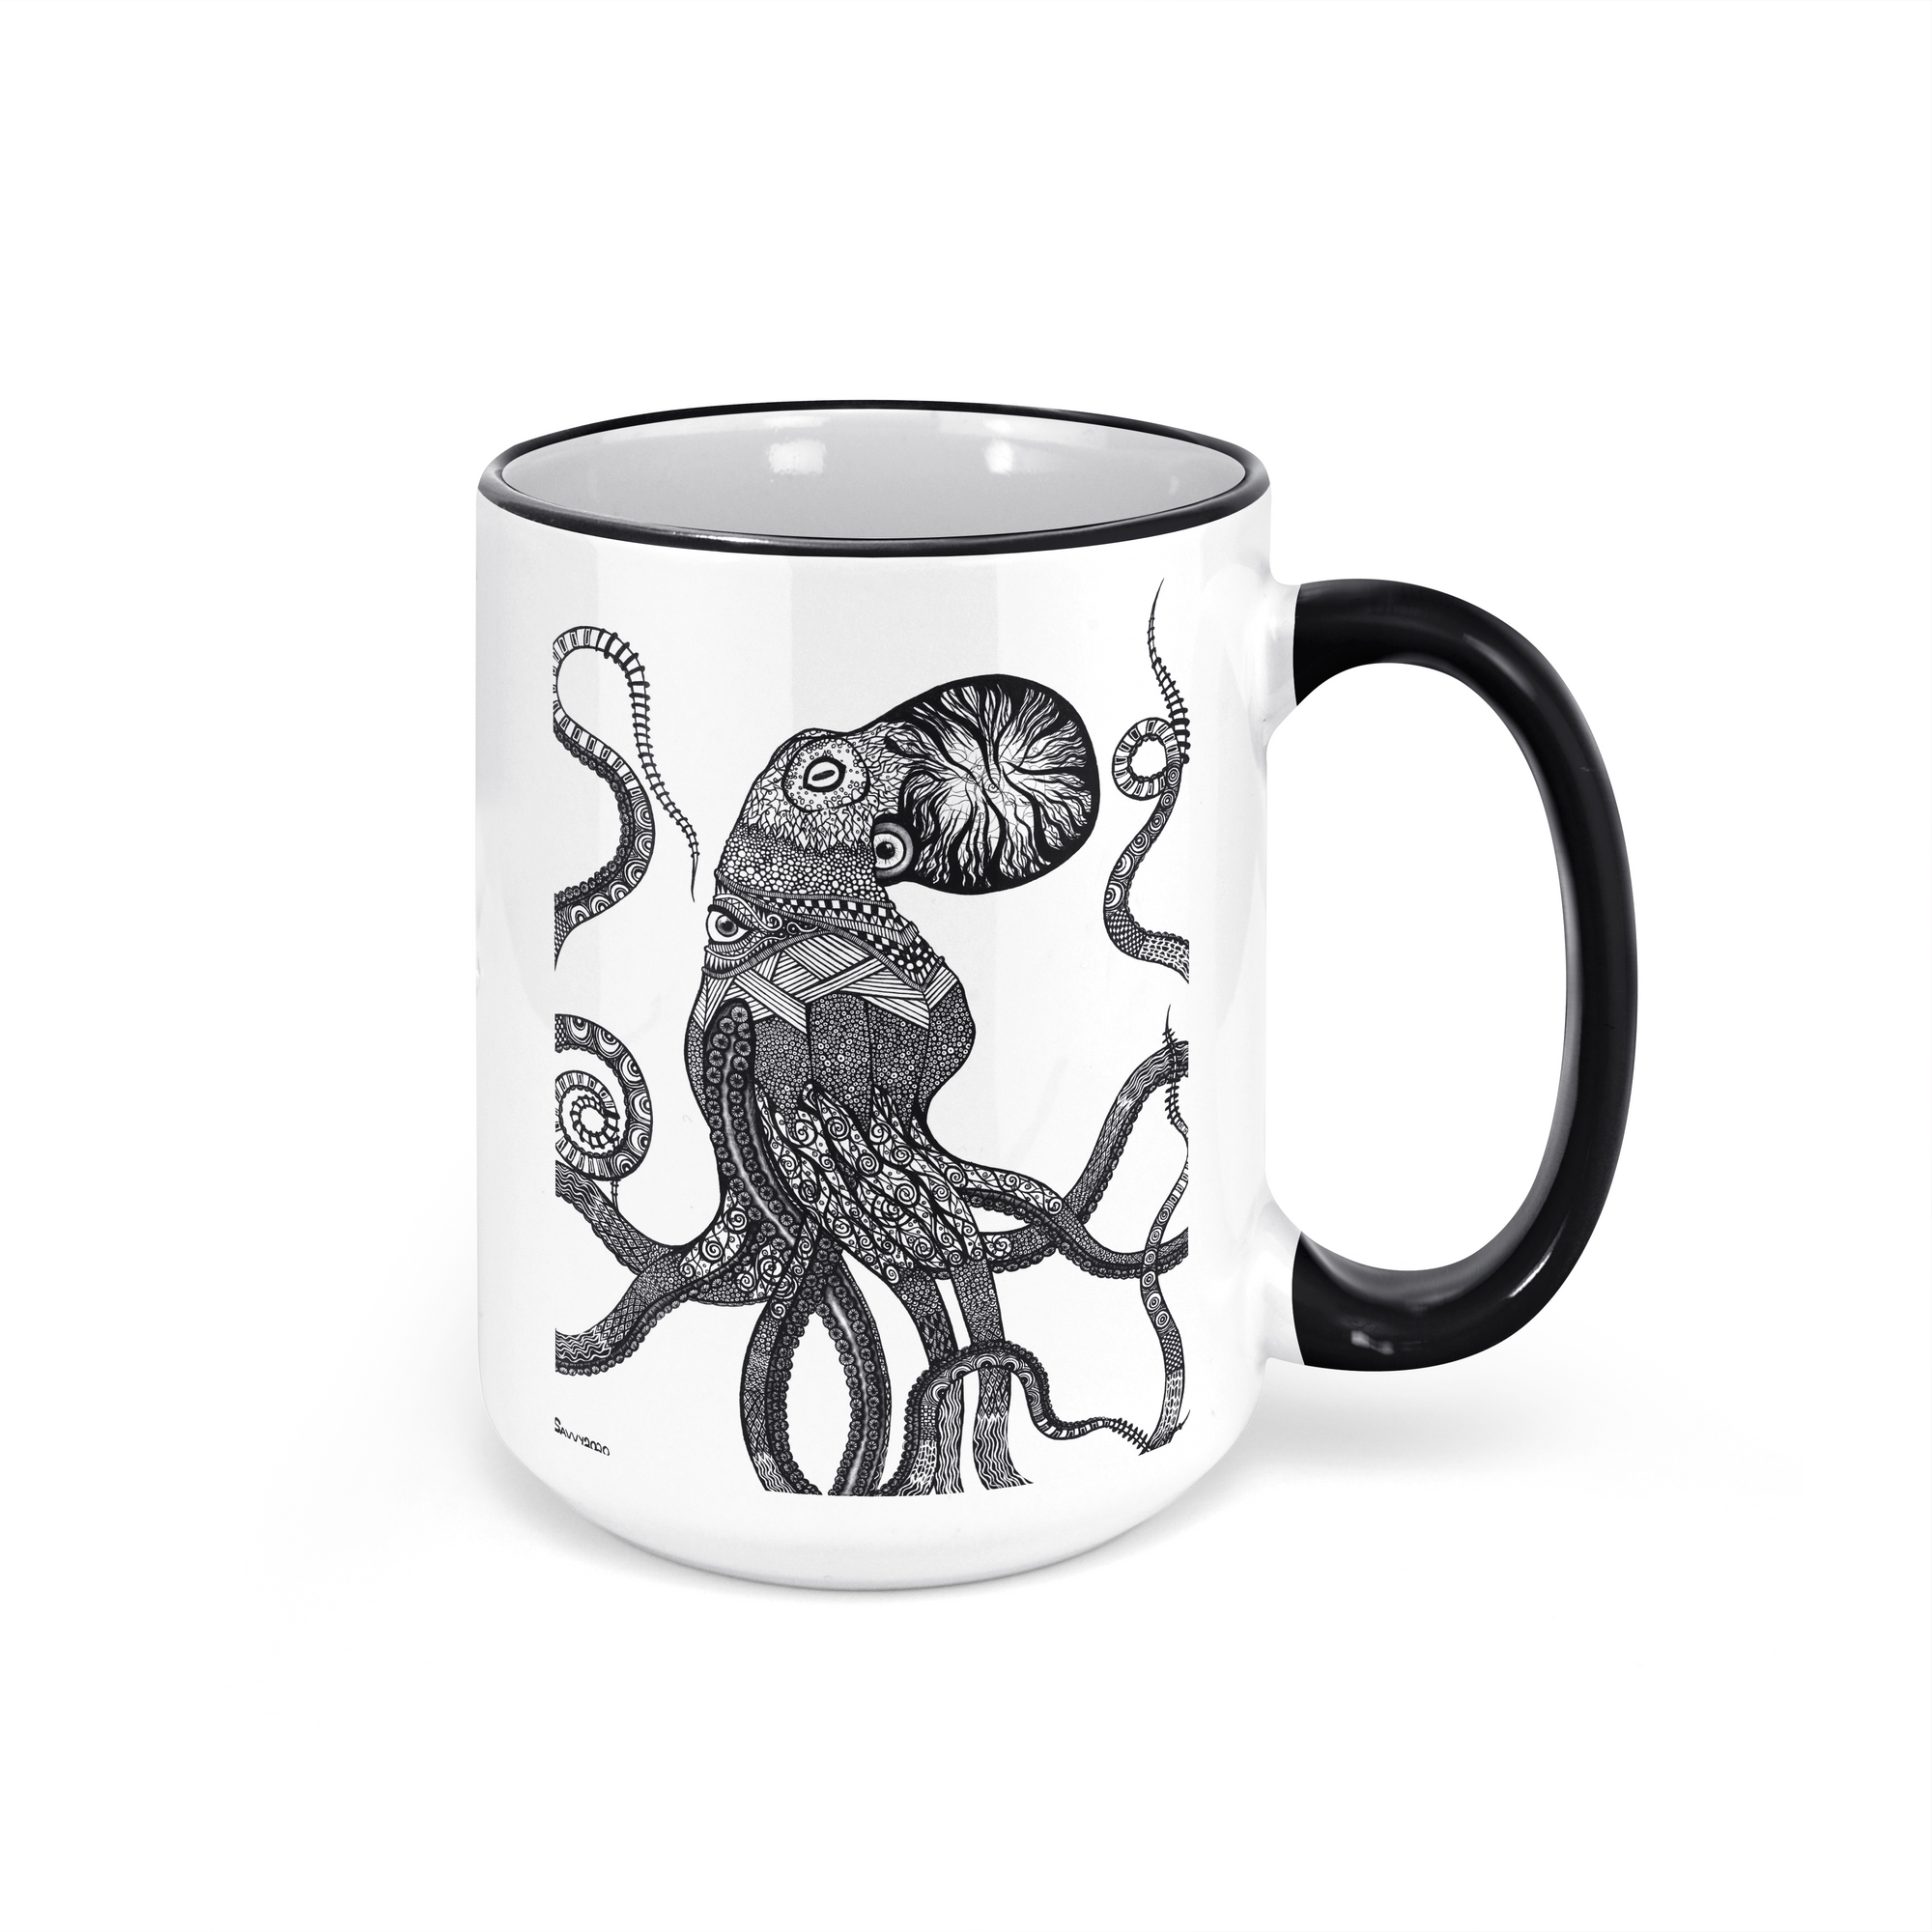 "Ocular Octopus" (Black/White Version) - 15oz Coffee Mug